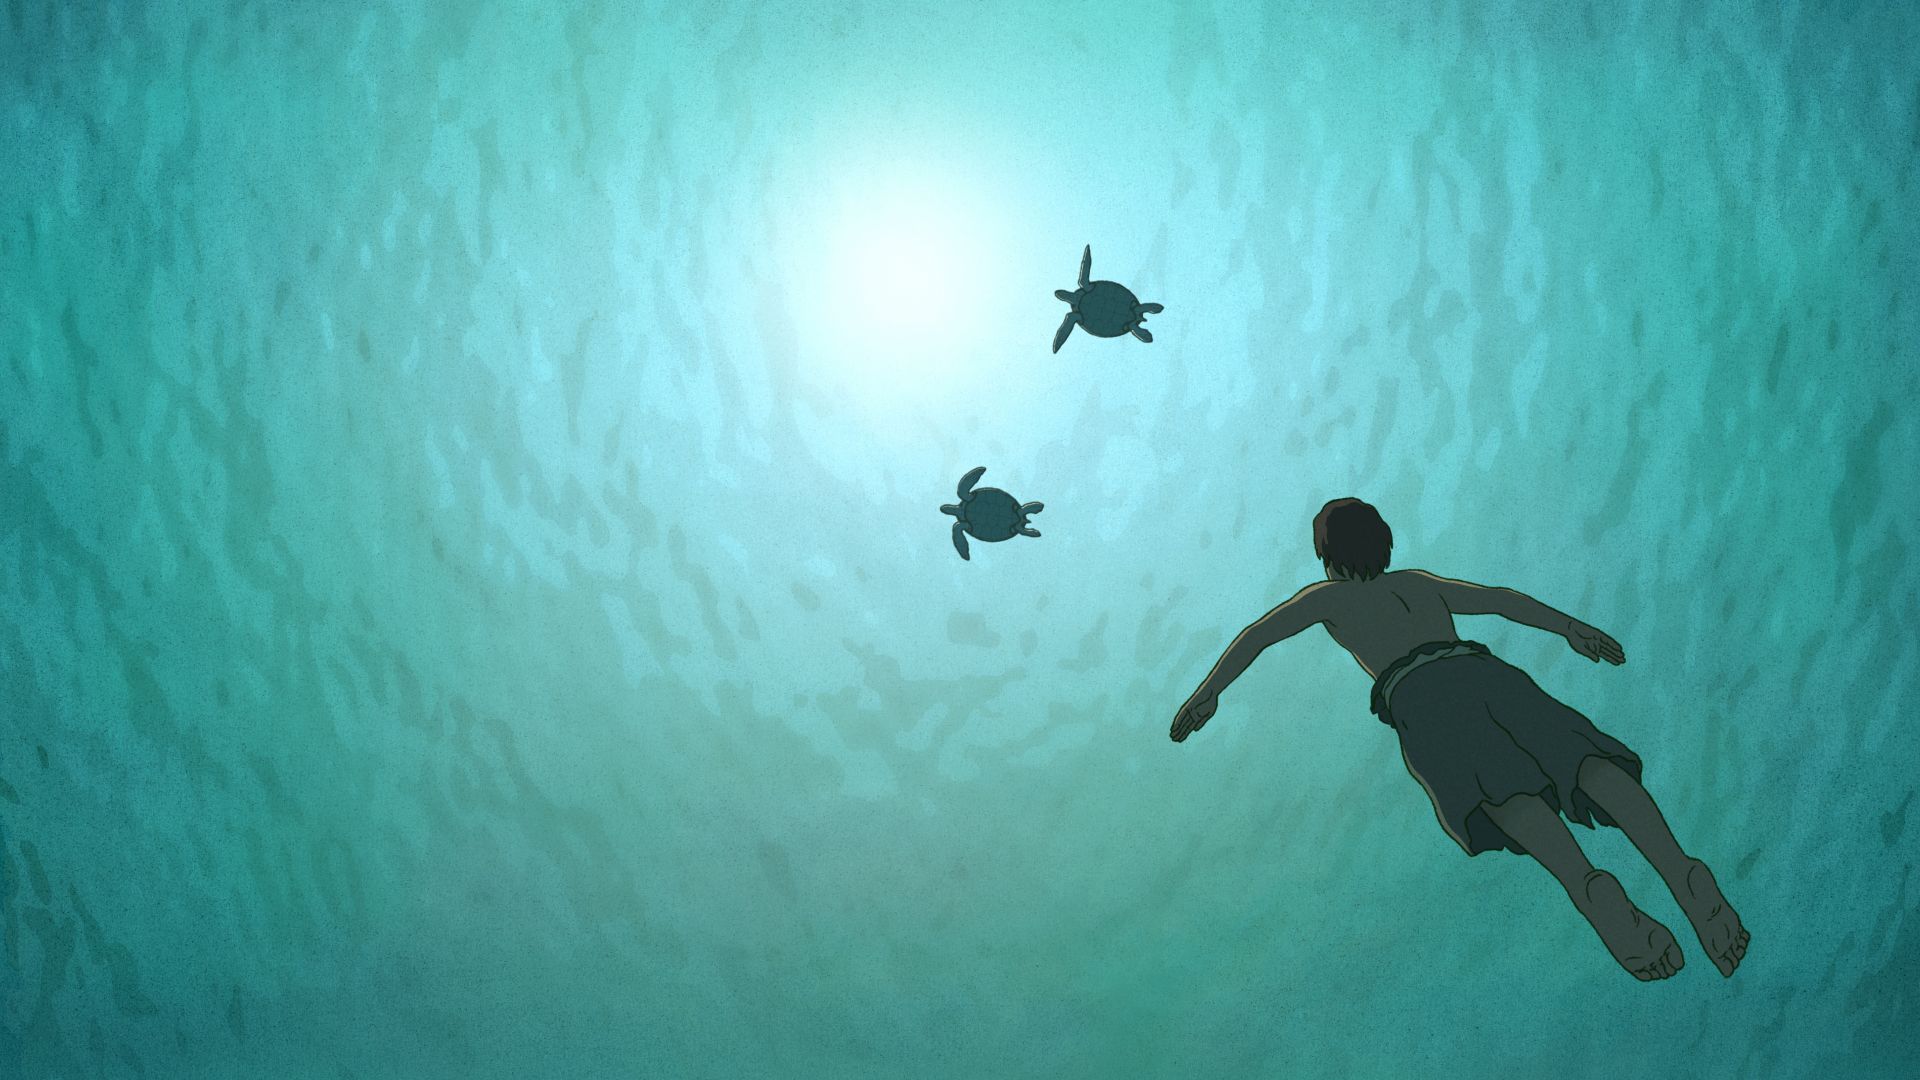 Красная черепаха, лучшие мультфильмы, The Red Turtle, La tortue rouge, best animation movies (horizontal)